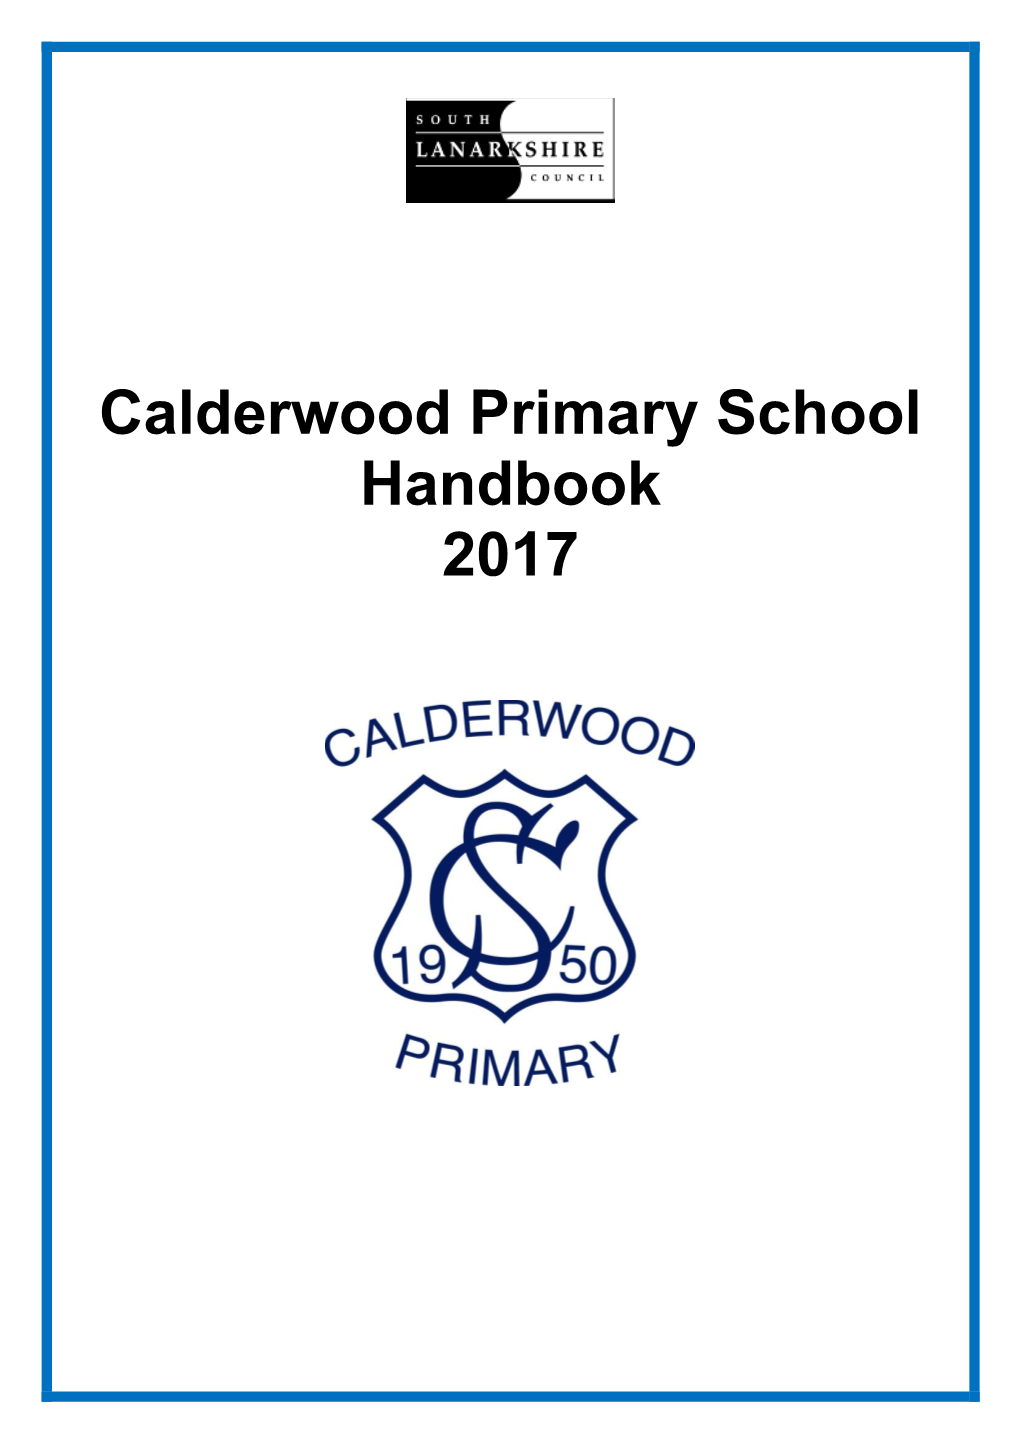 Calderwood Primary School Handbook 2017